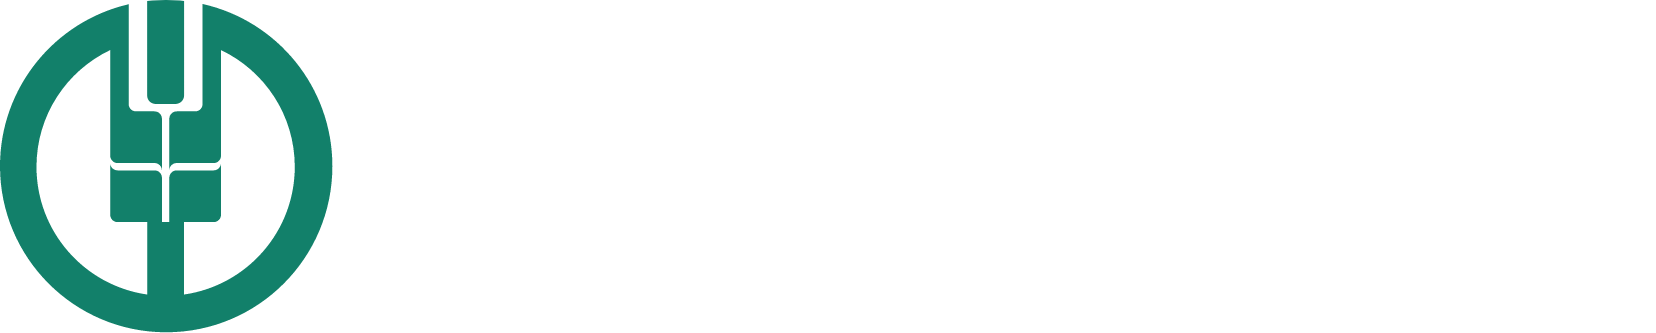 Agricultural Bank of China logo large for dark backgrounds (transparent PNG)